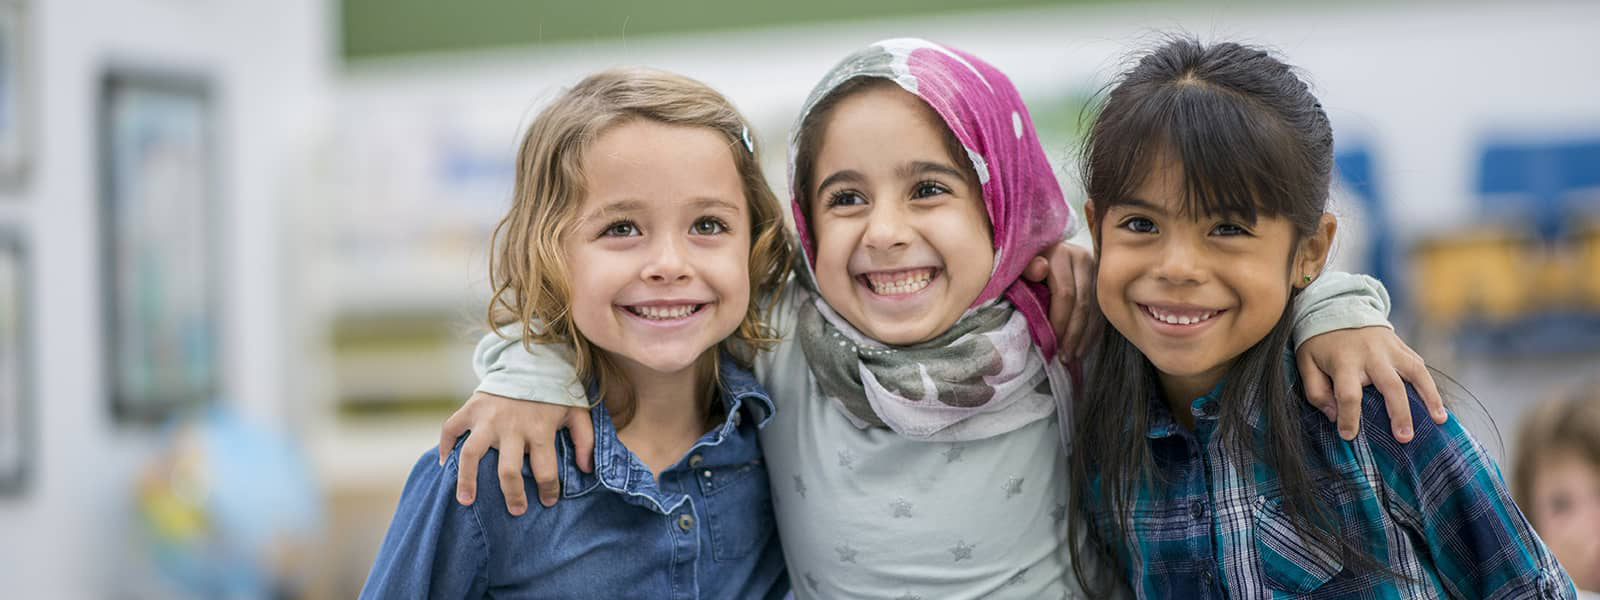 Three schoolgirls smiling in a classroom